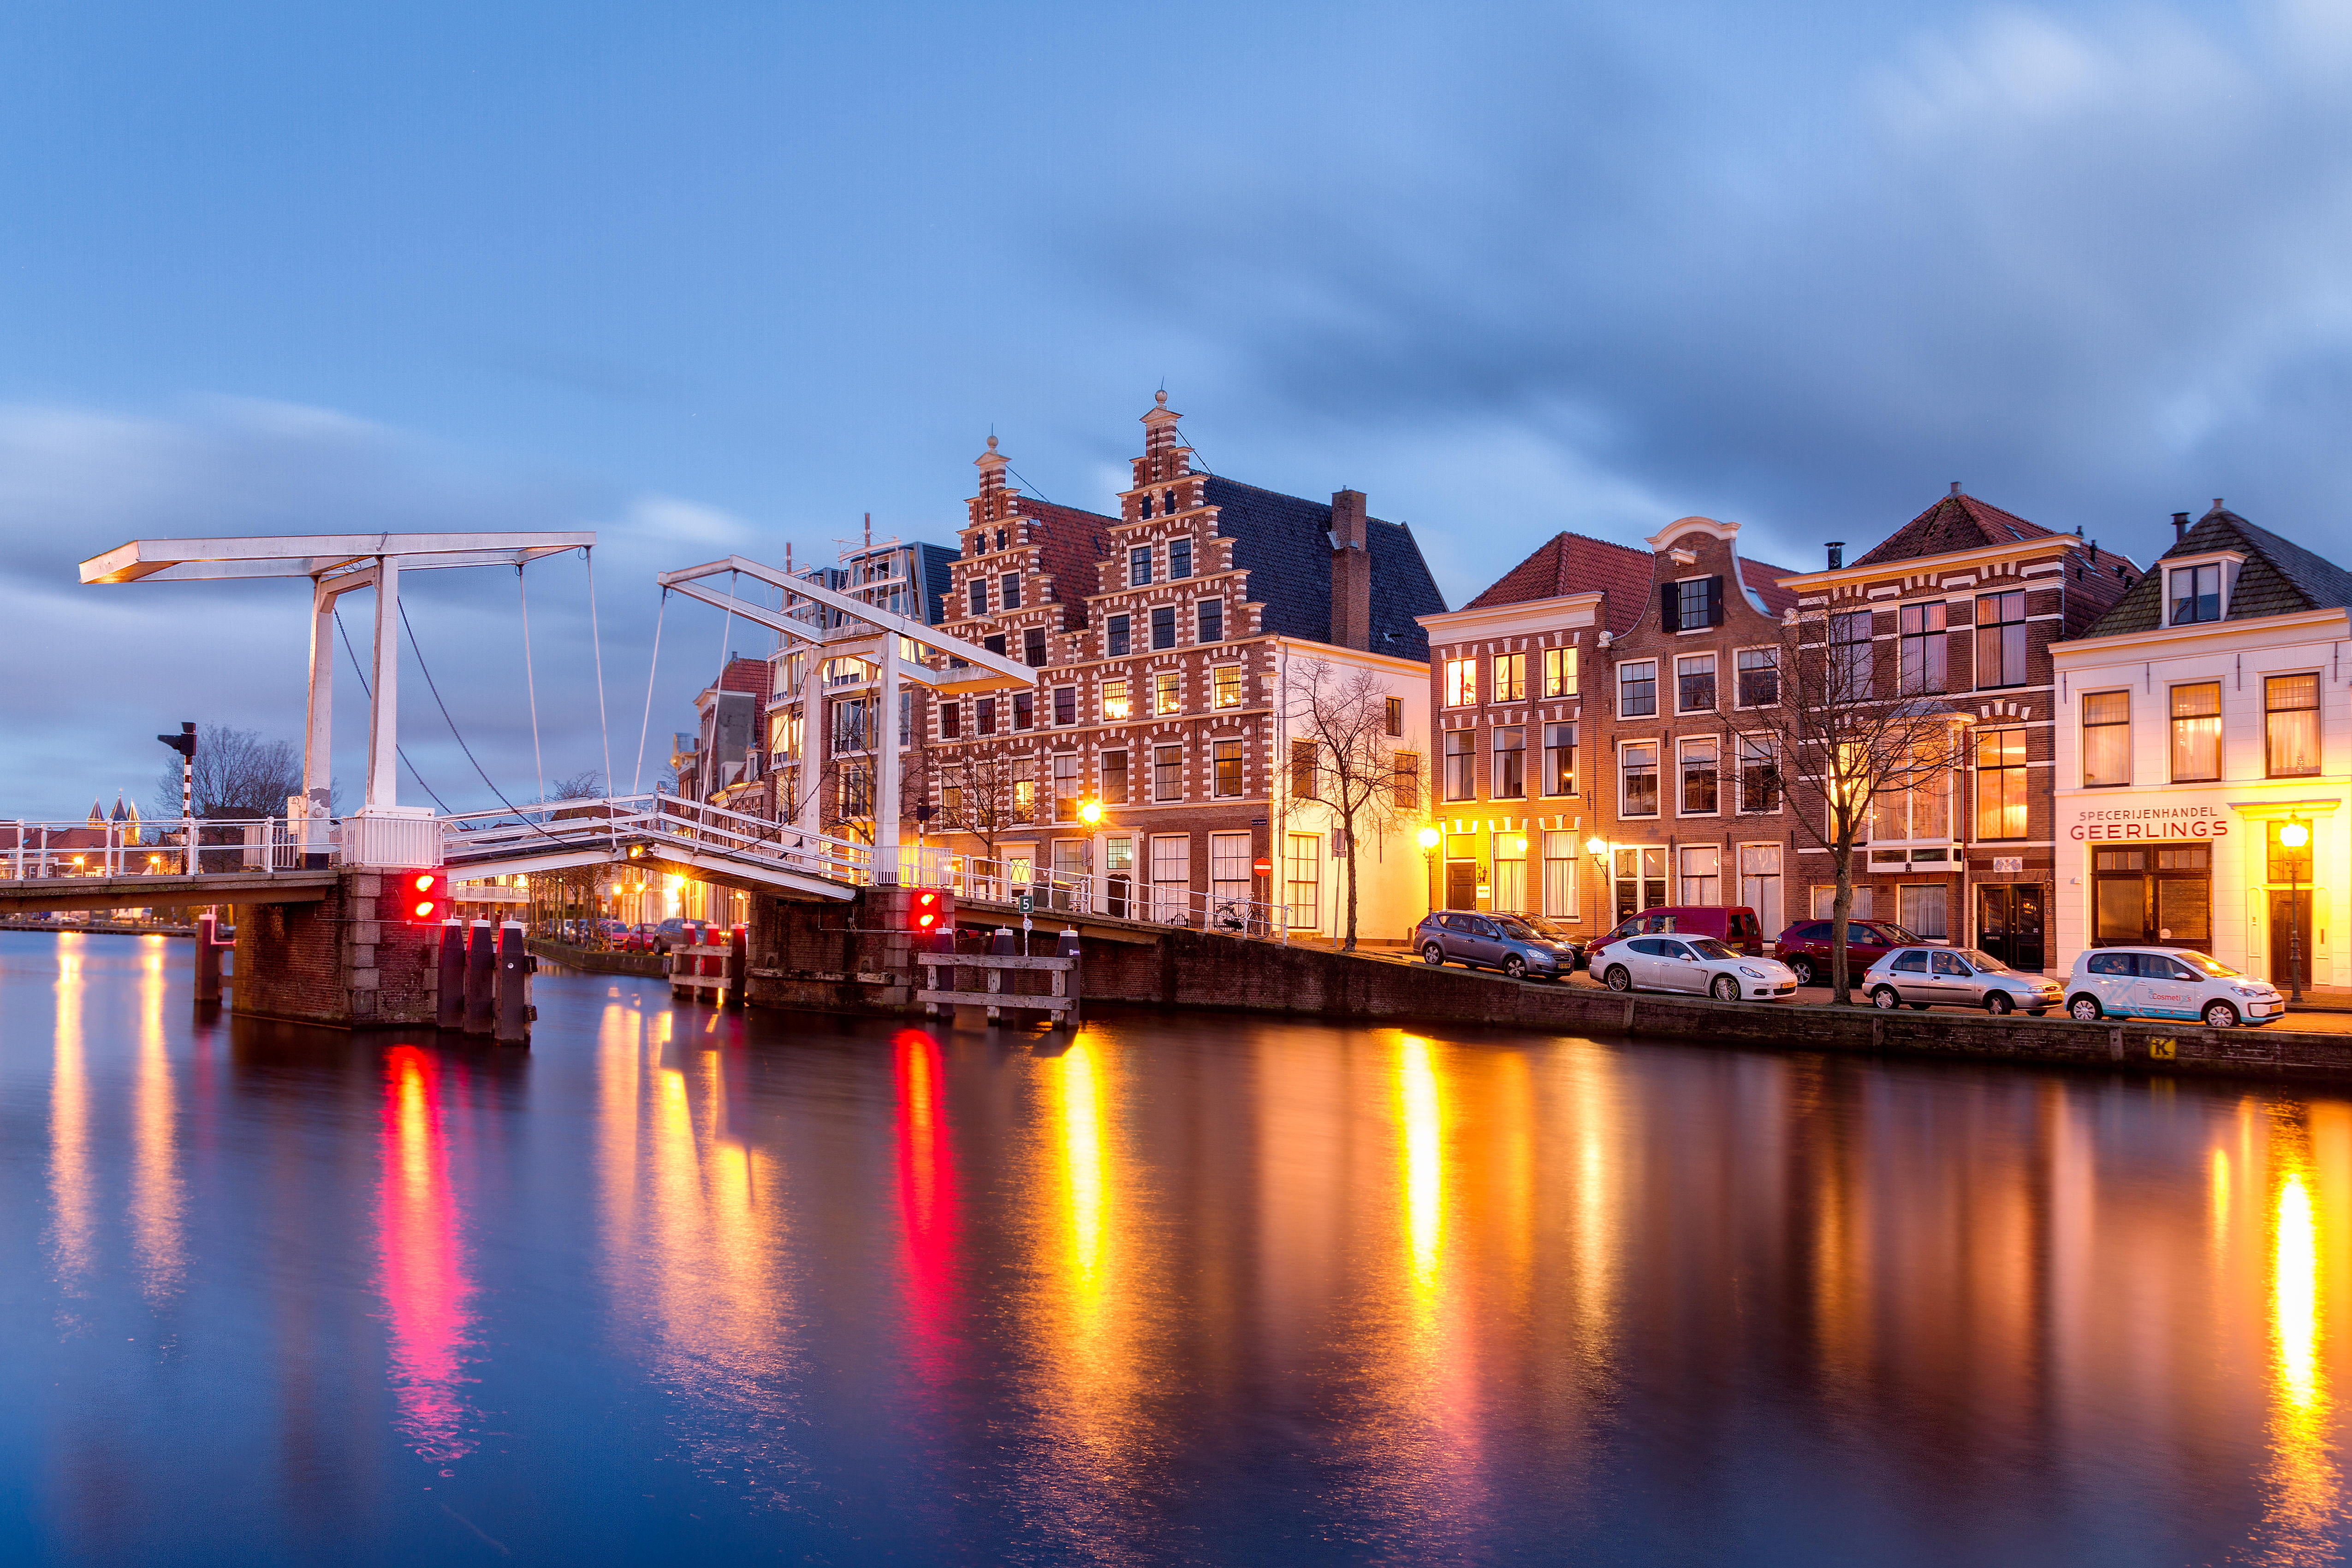 Wallpapers city lights Netherlands on the desktop